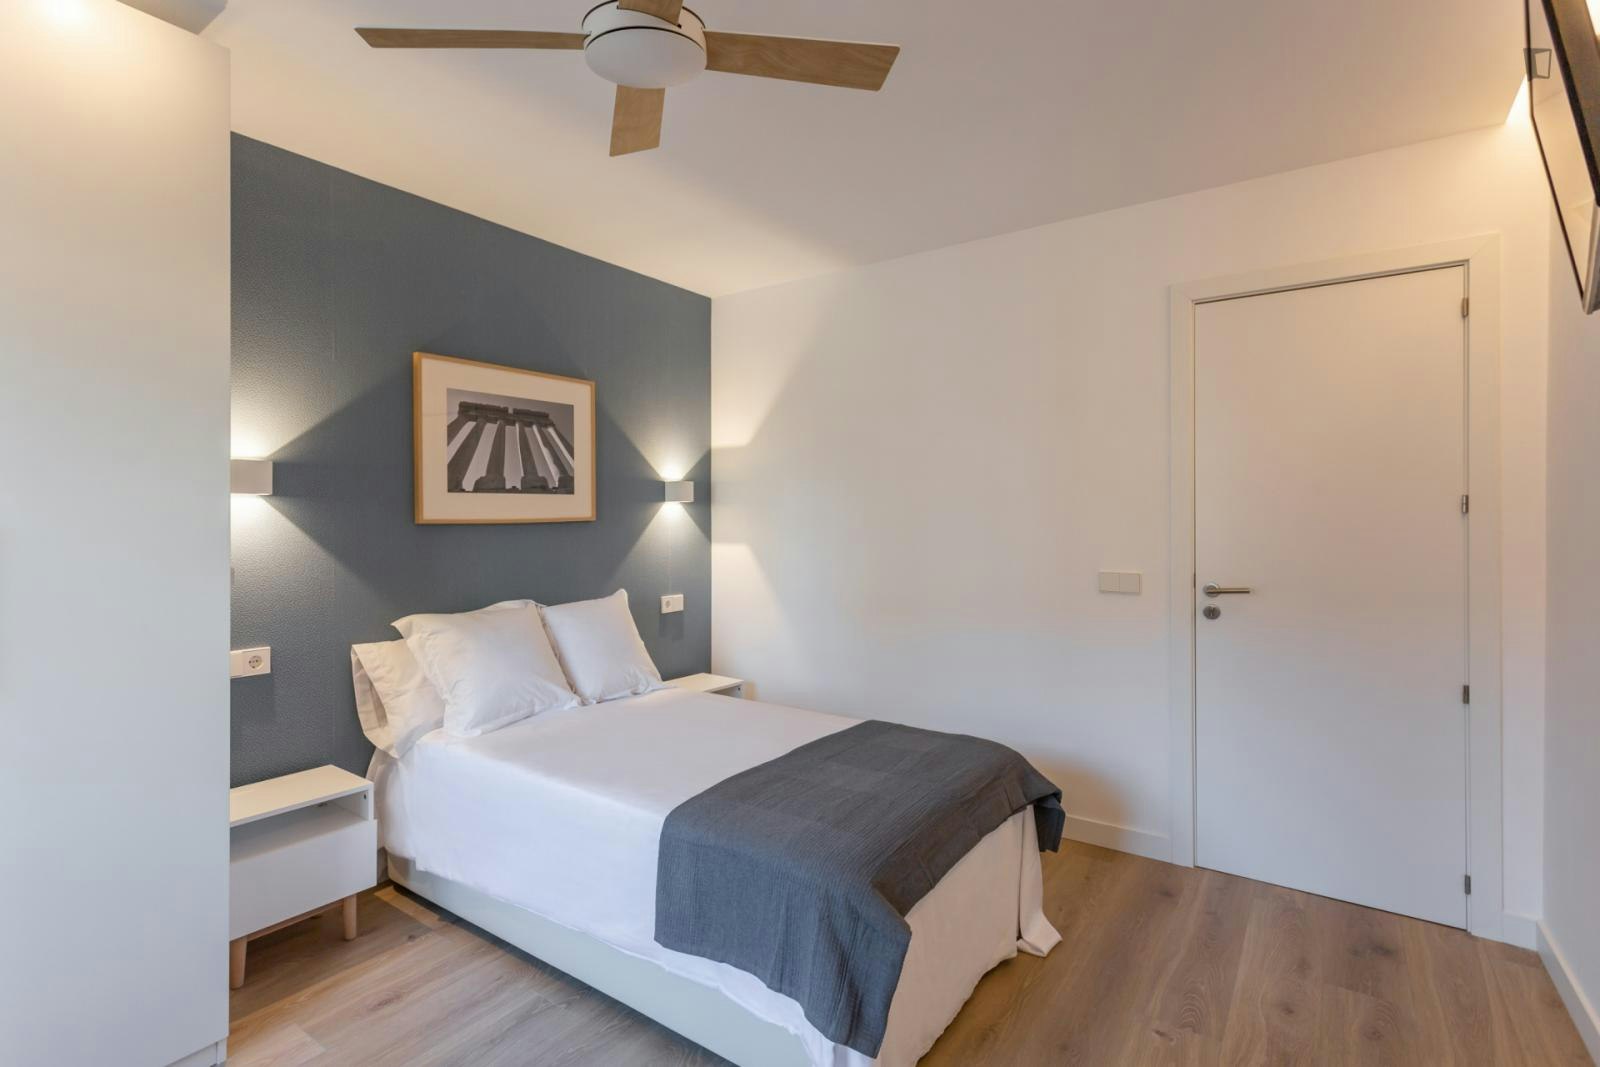 Homely double bedroom near Universidad de Navarra